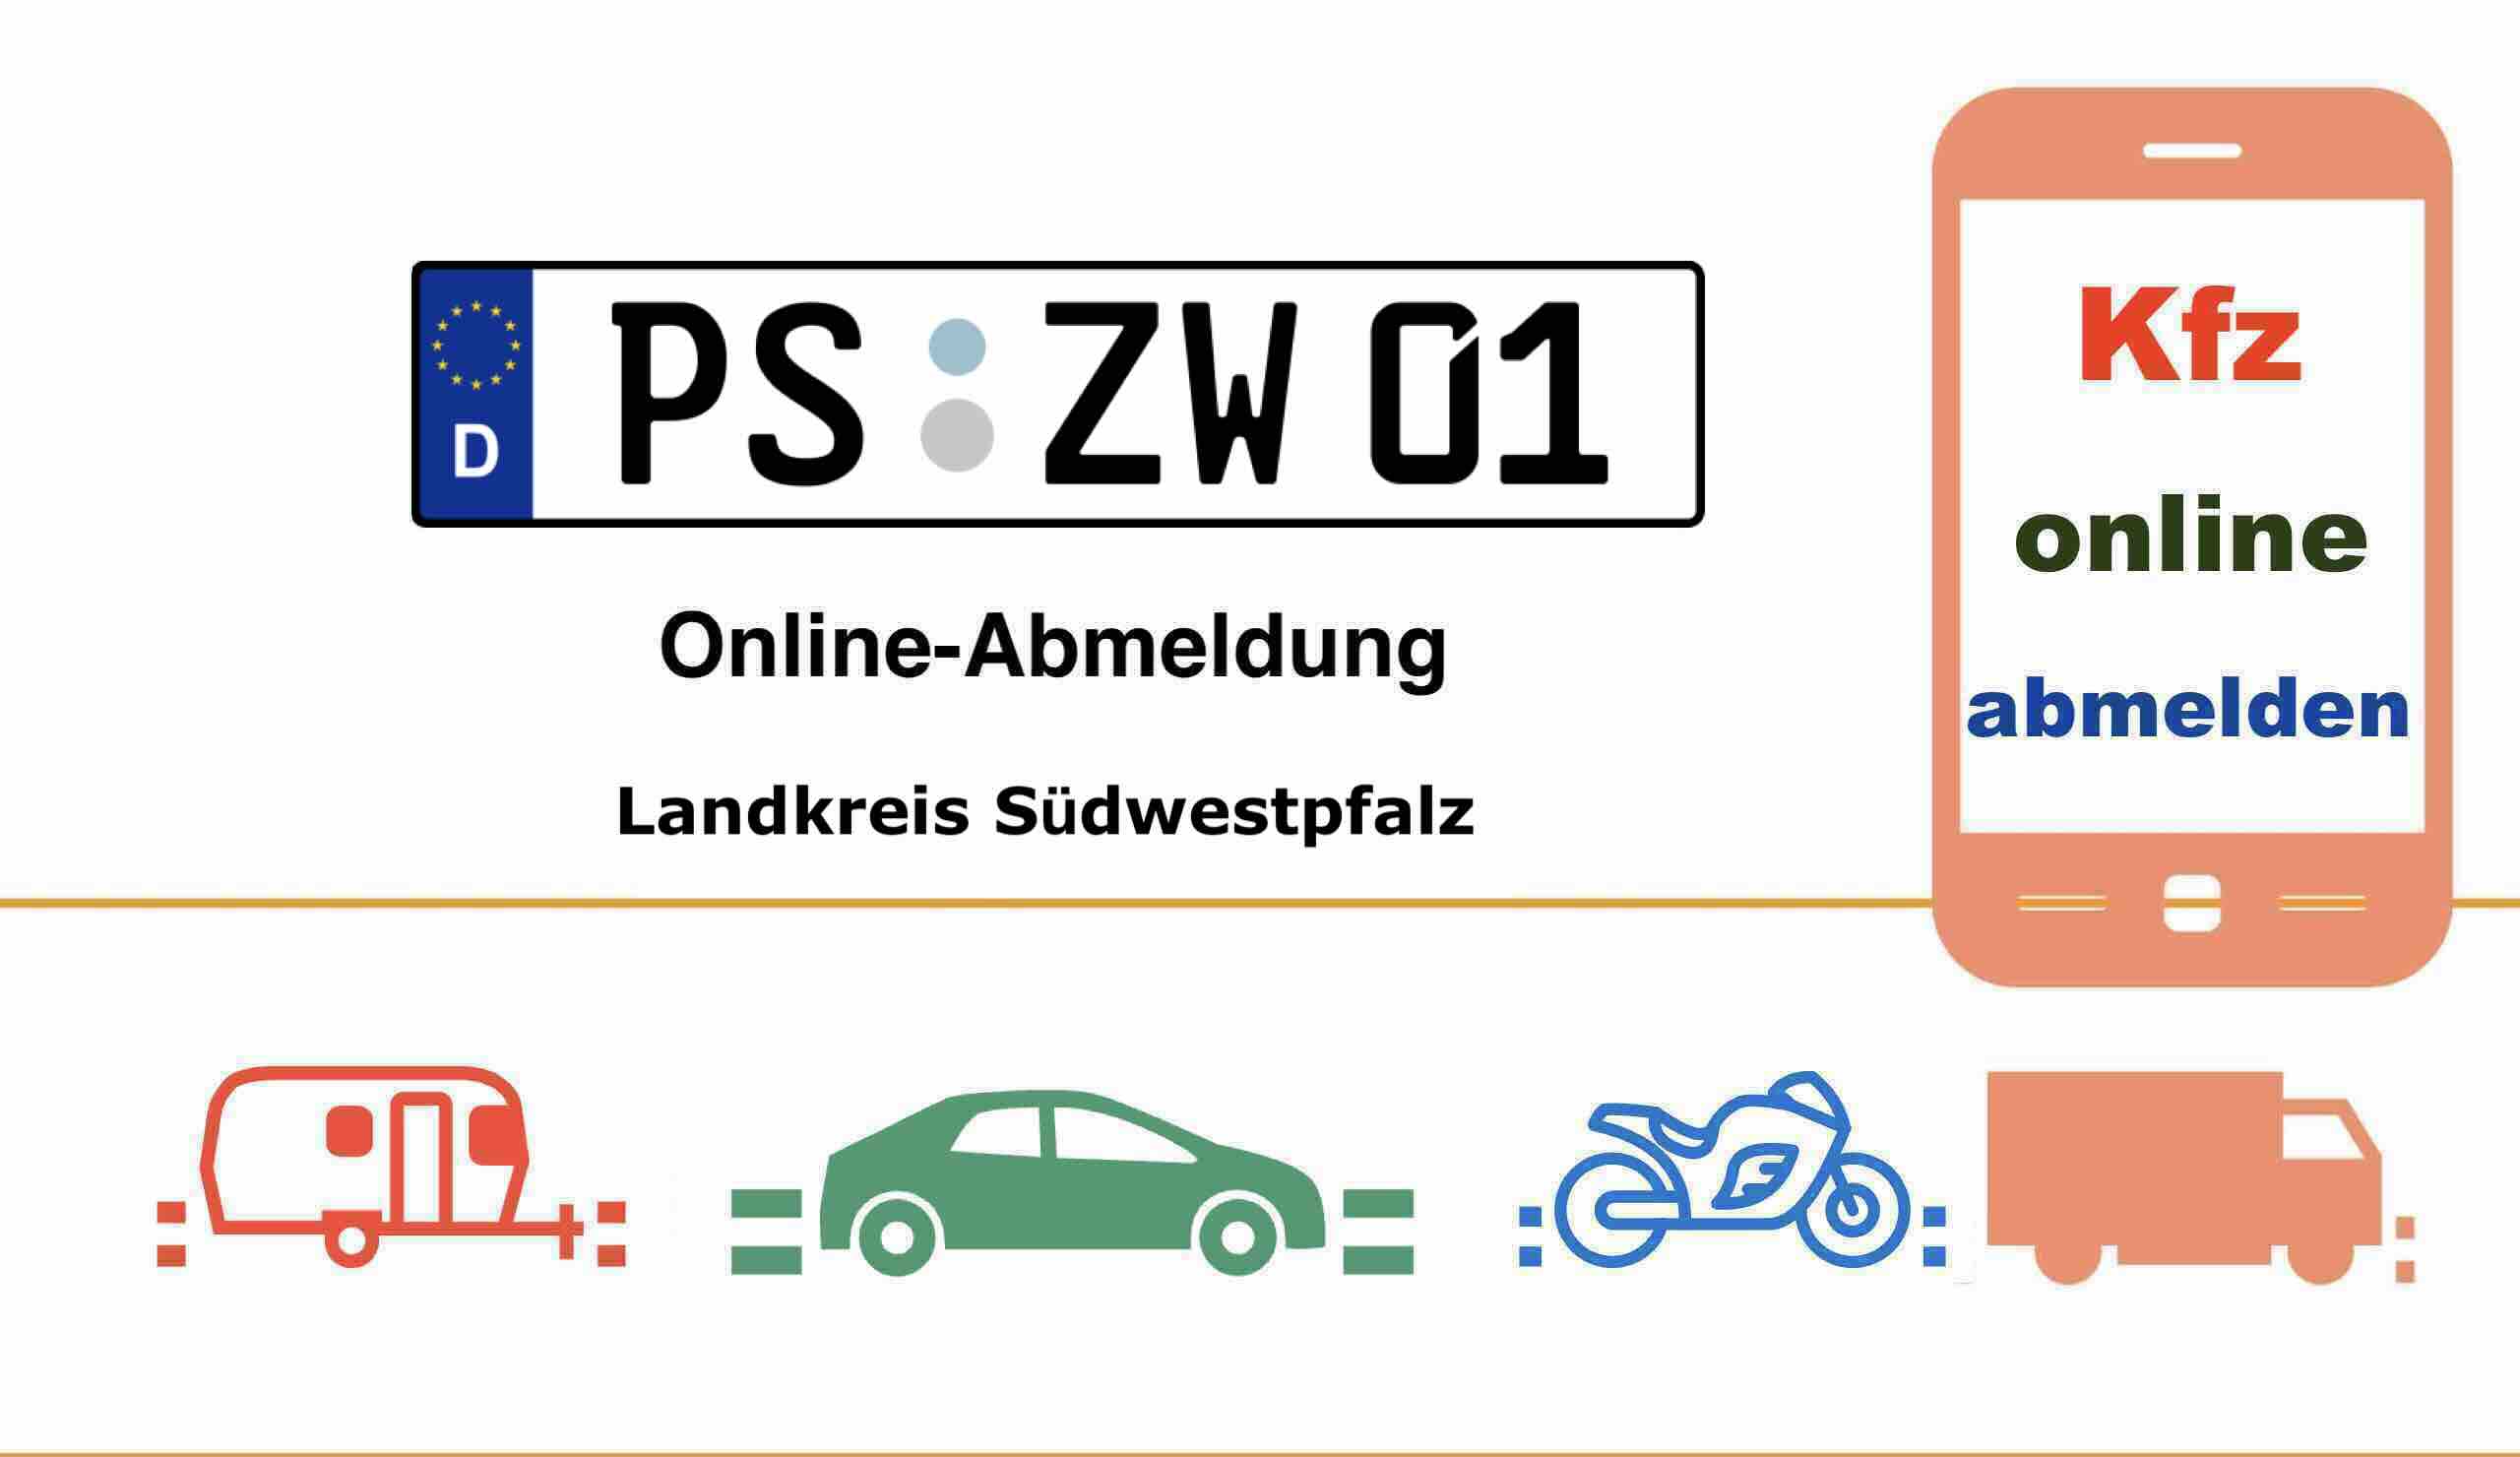 Kfz Online-Abmeldung im Landkreis Südwestpfalz 